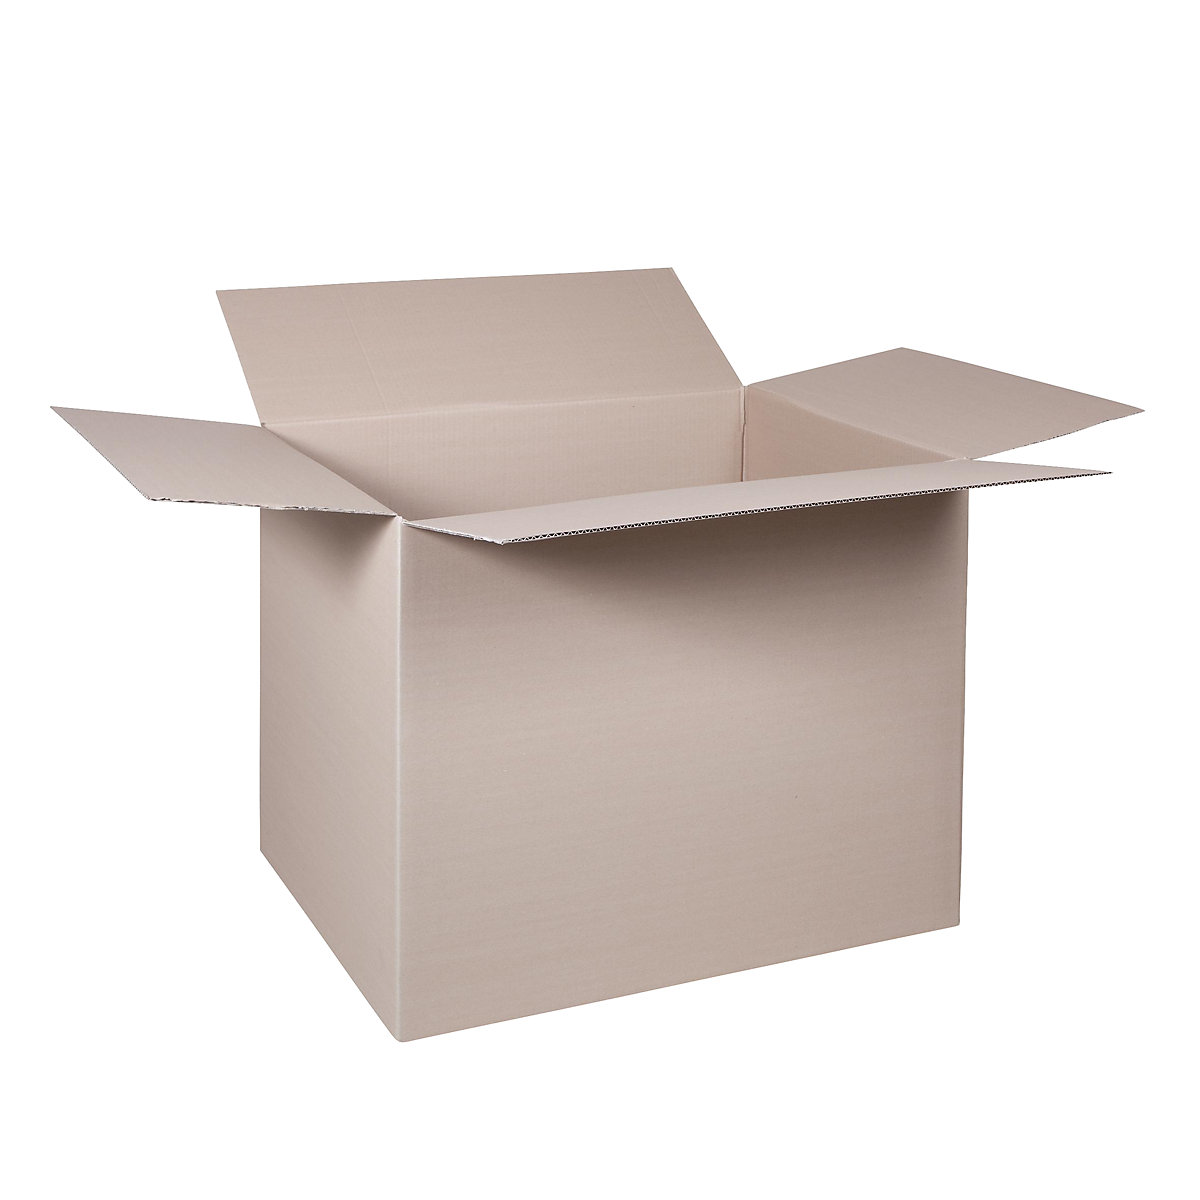 Folding cardboard box, FEFCO 0201, made of single fluted cardboard, internal dimensions 600 x 400 x 400 mm, pack of 100-23